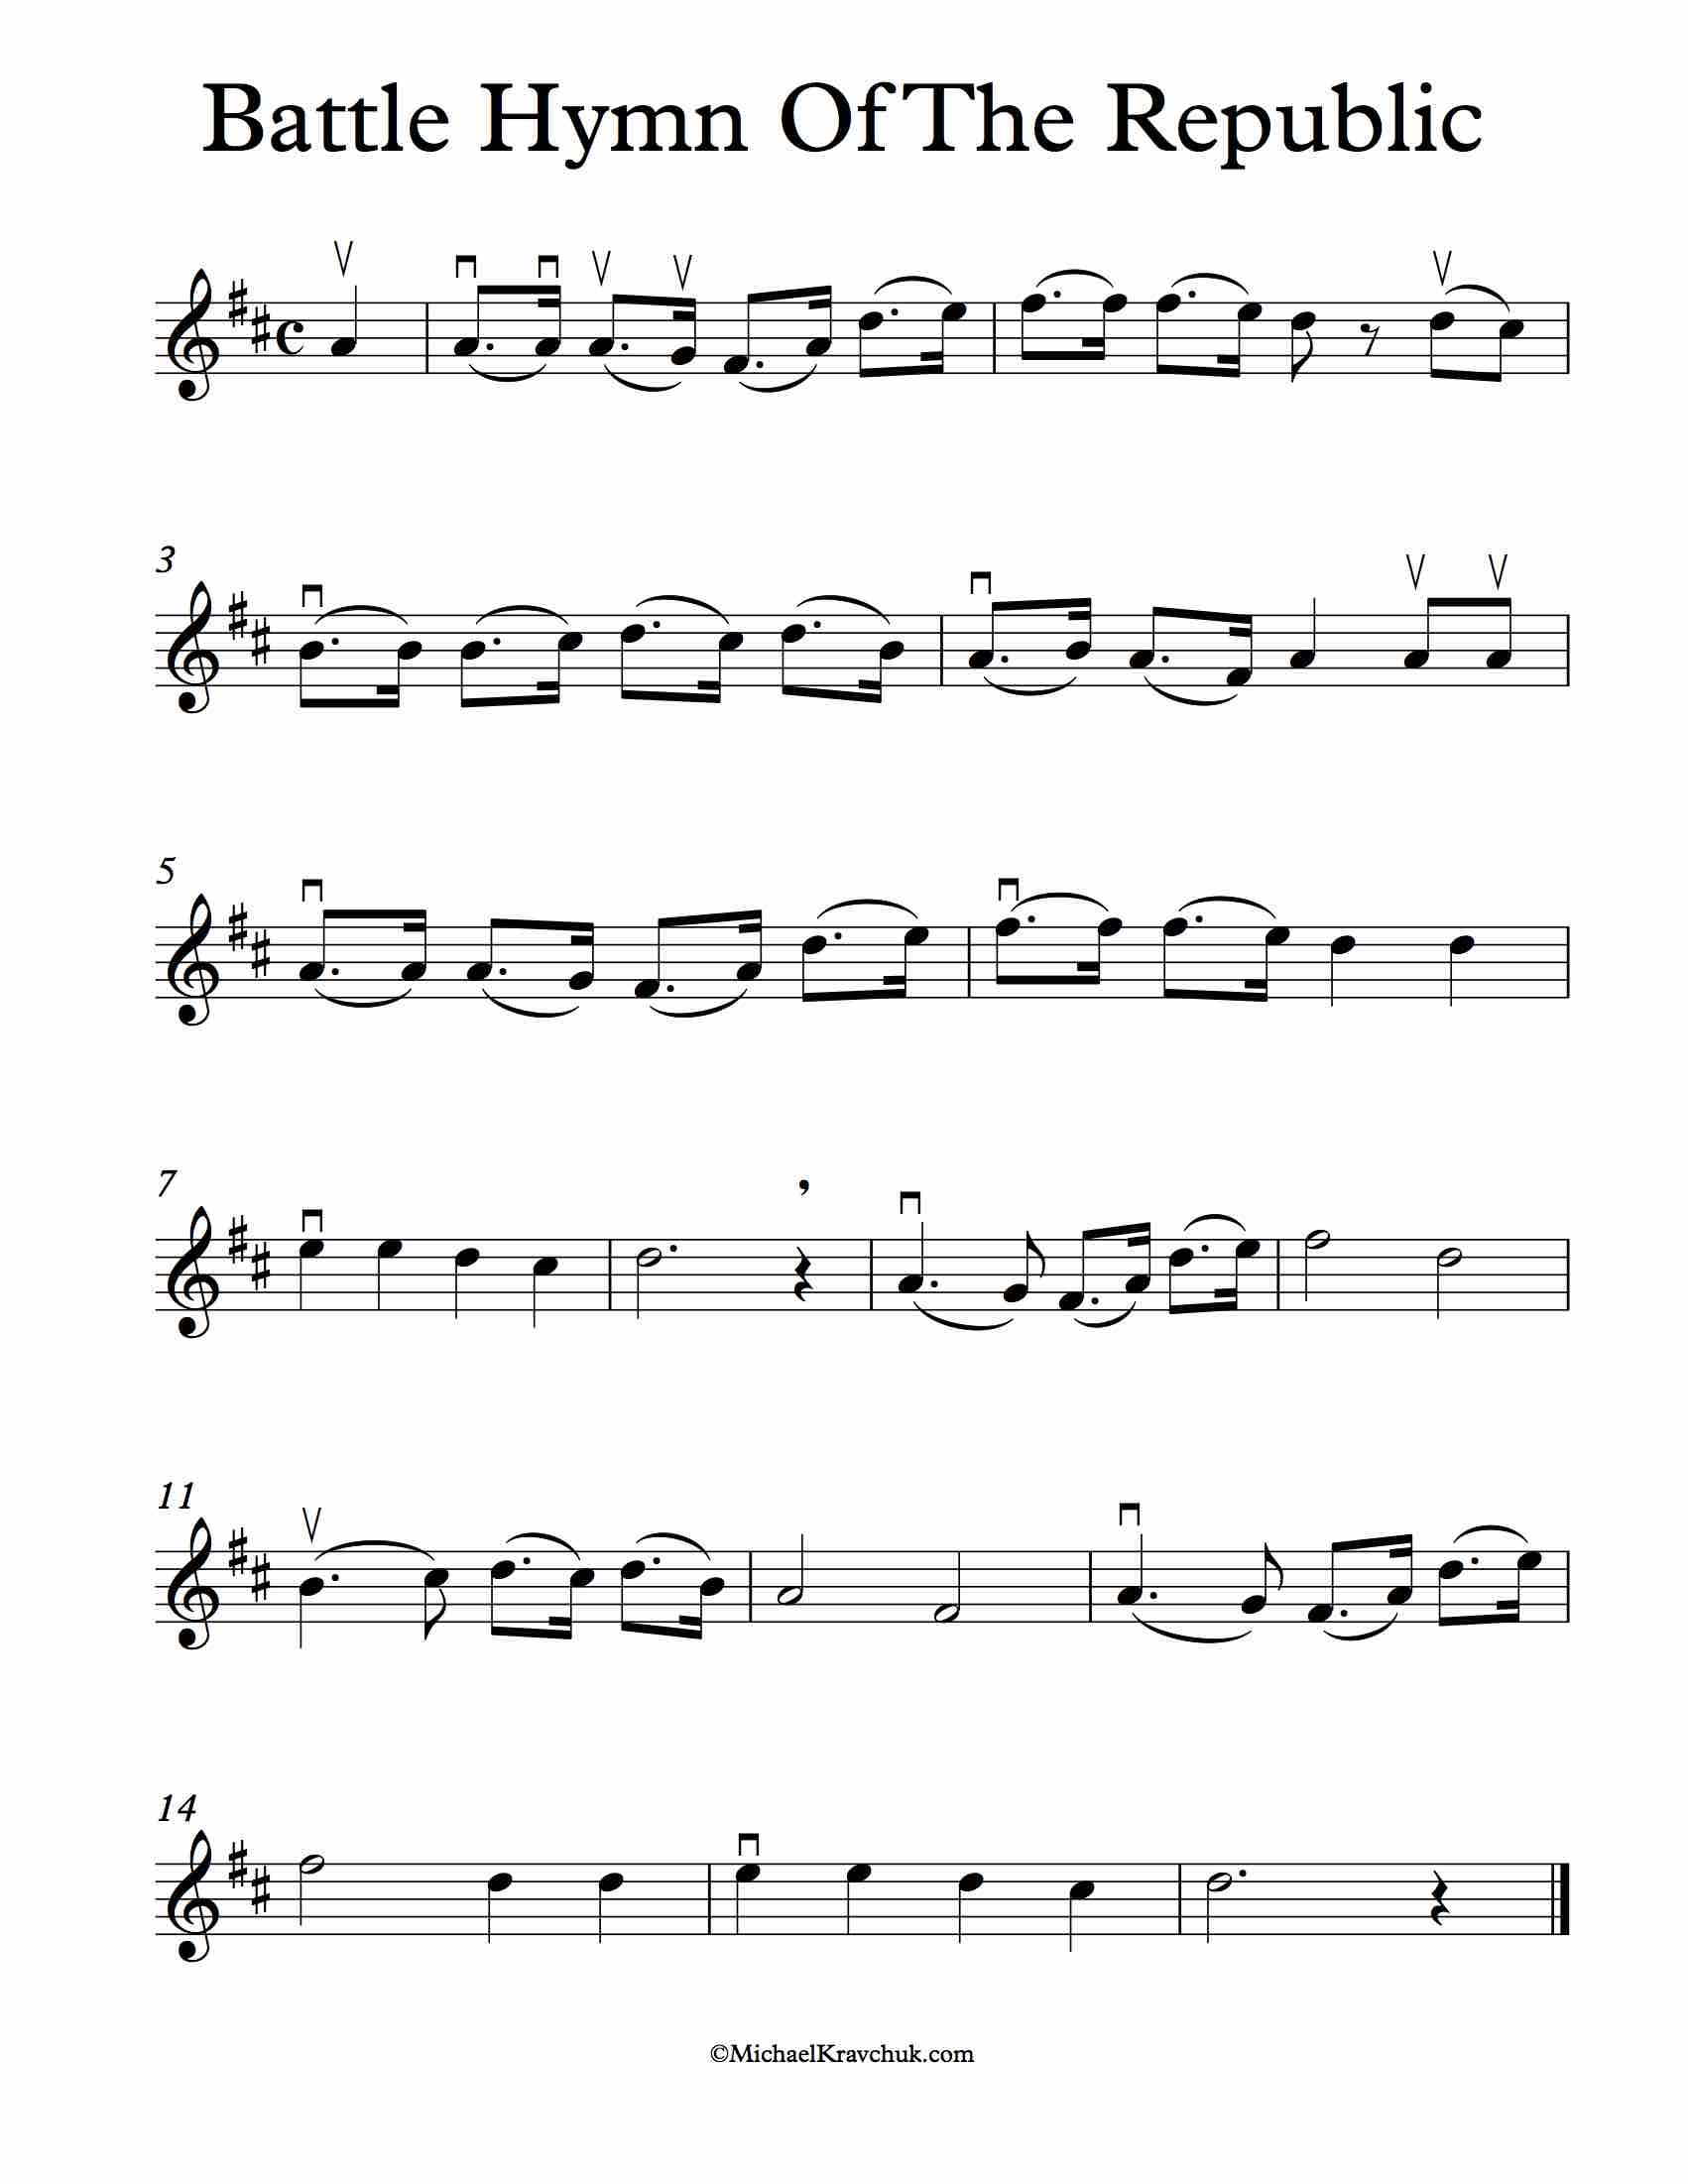 Battle Hymn of the Republic Sheet Music Violin D Major